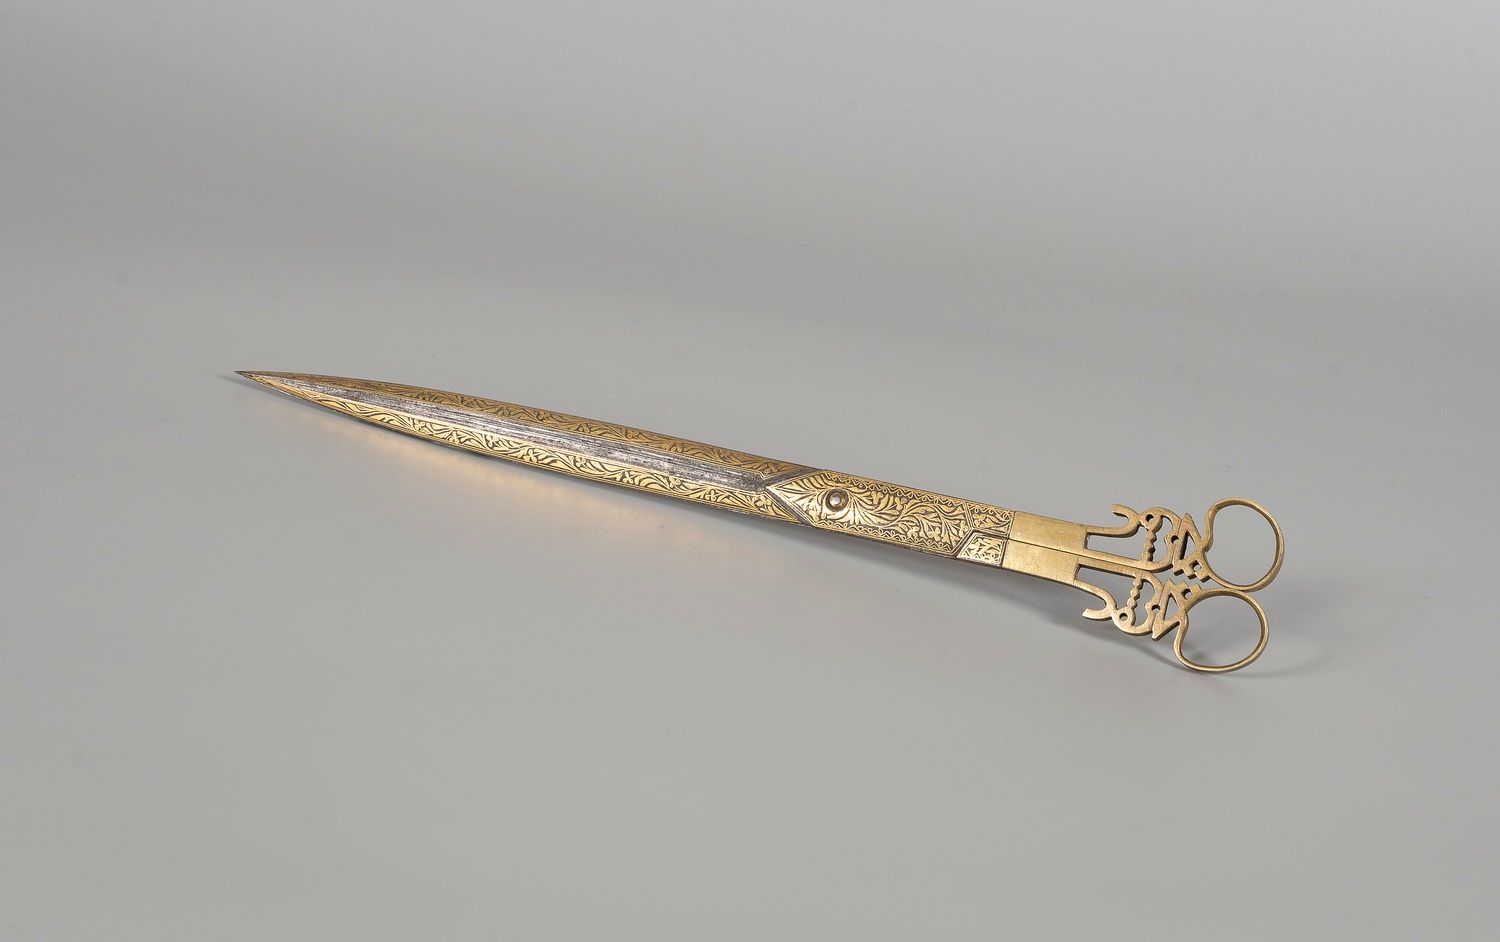 Null 镶金钢剪刀一对

伊朗，卡贾尔时期。

长28厘米